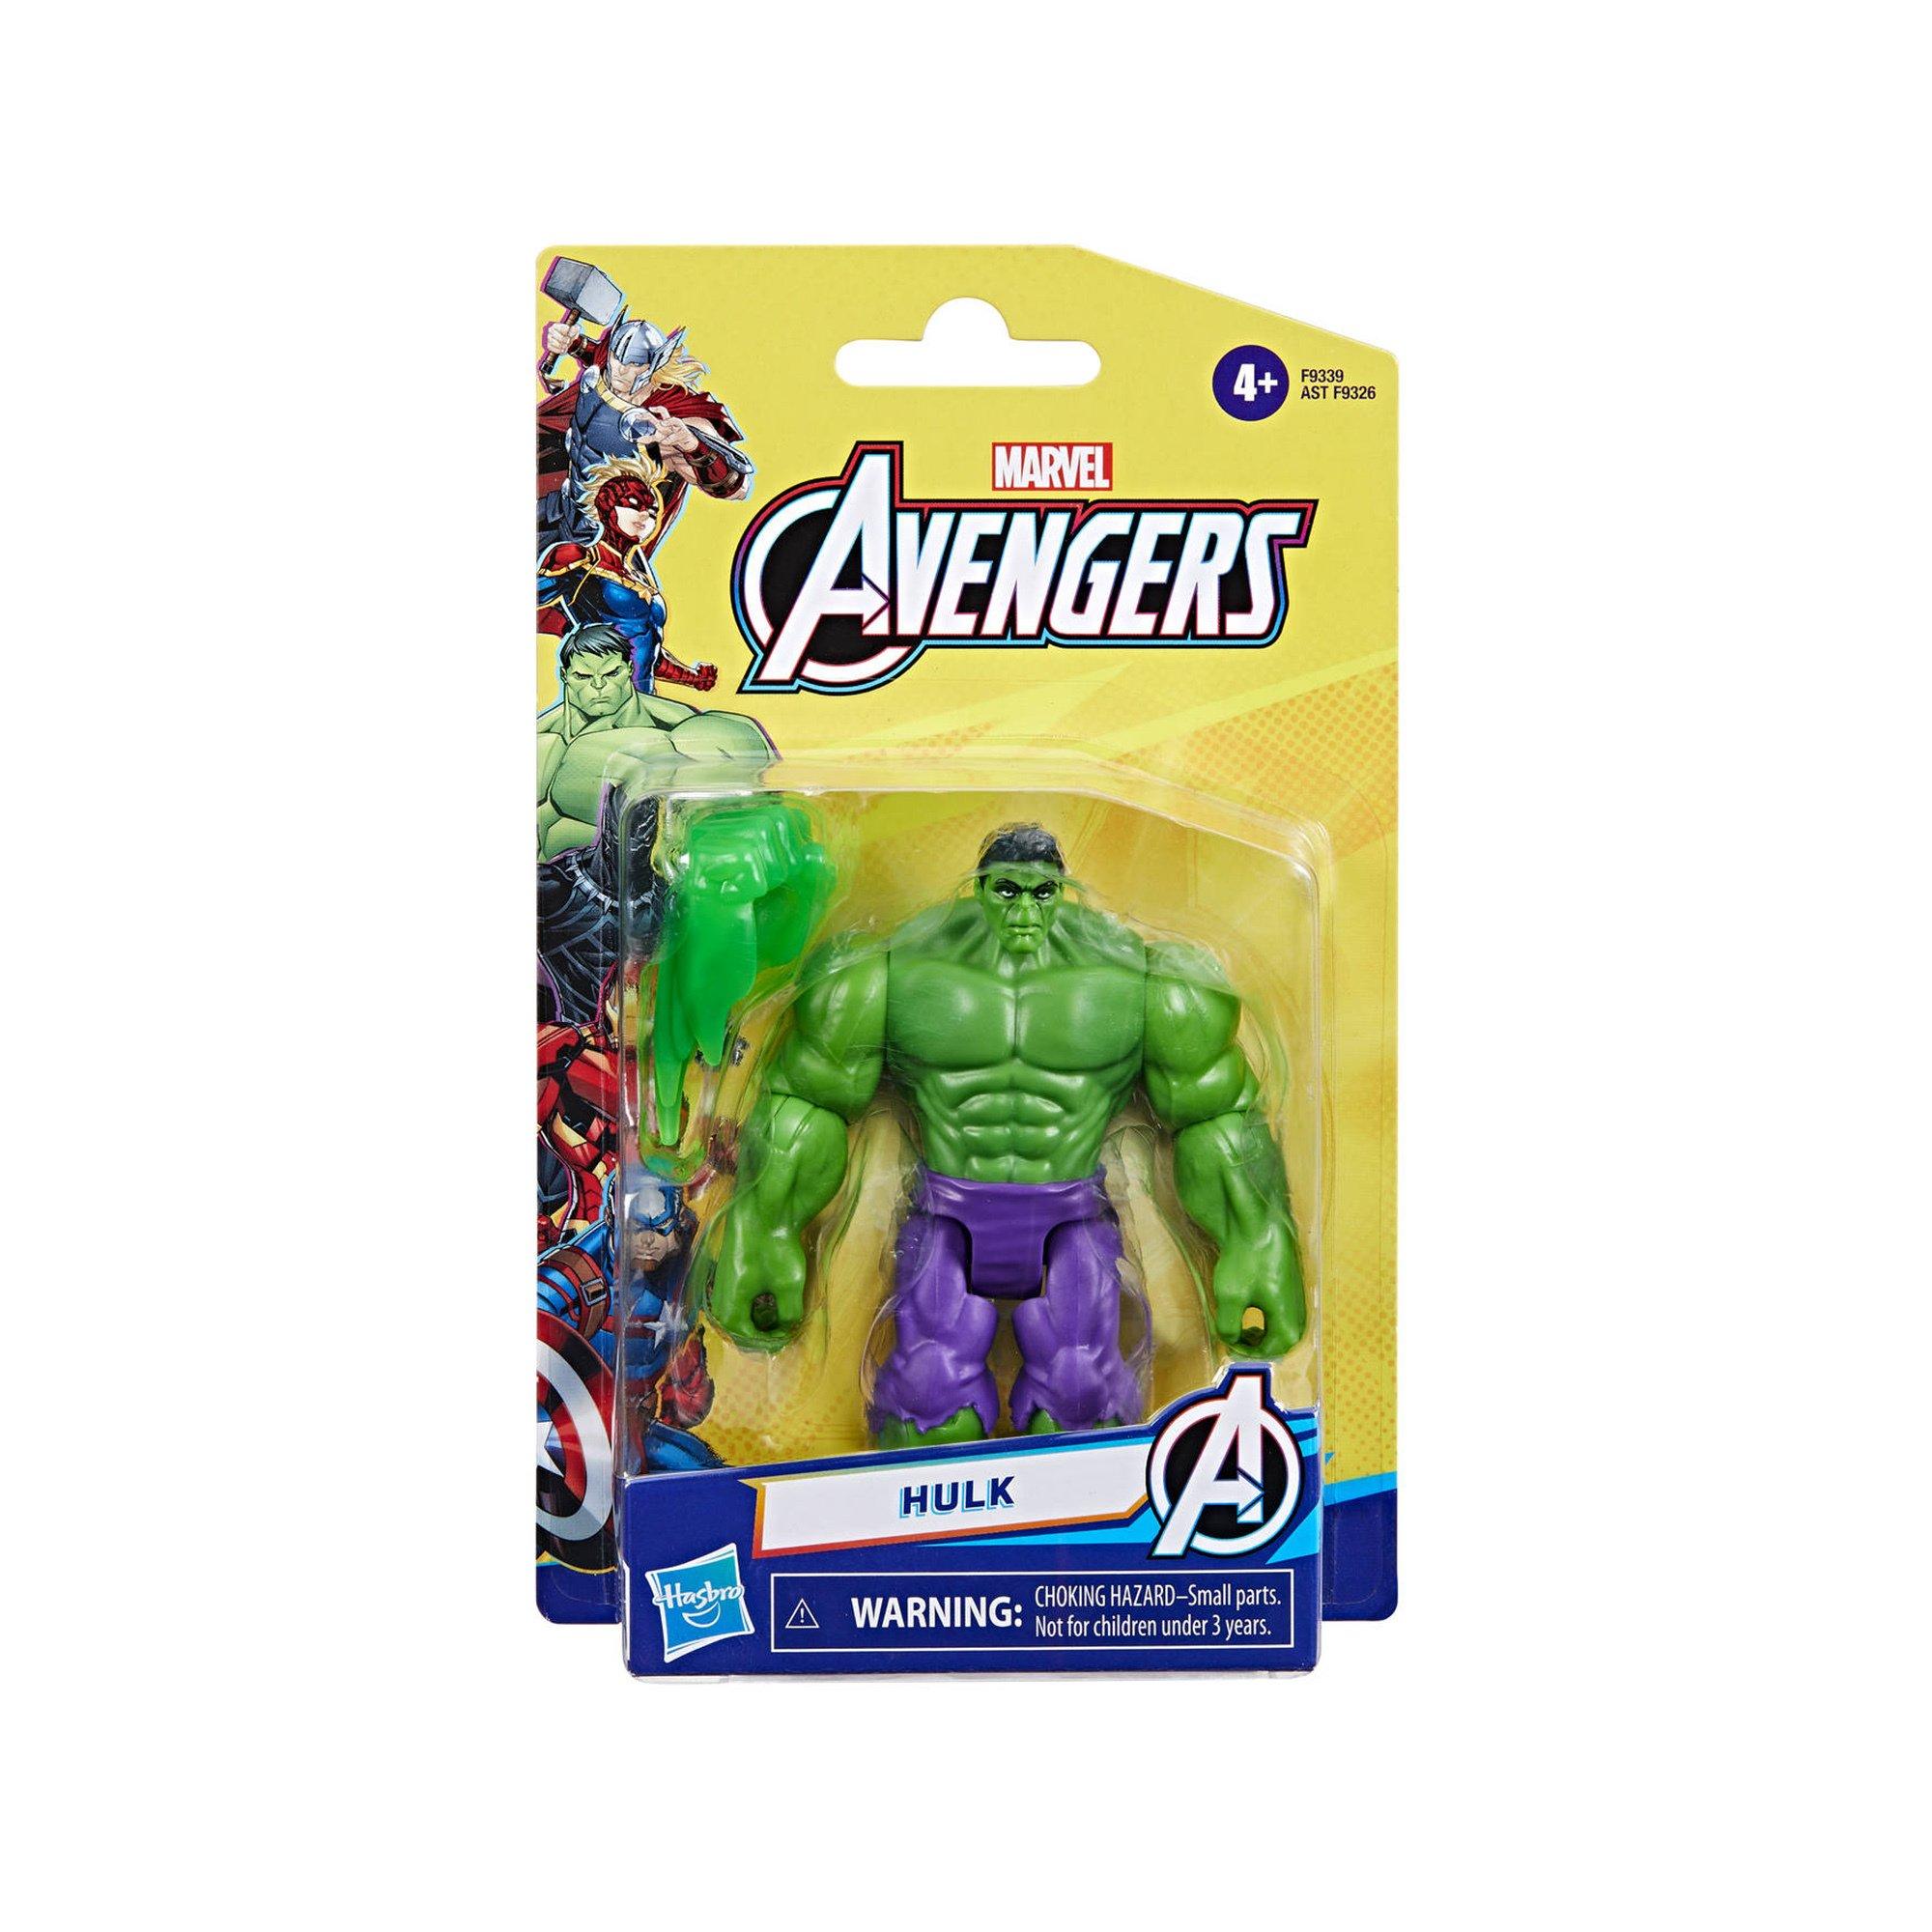 Hasbro  Vendicatori Figura Deluxe Hulk 